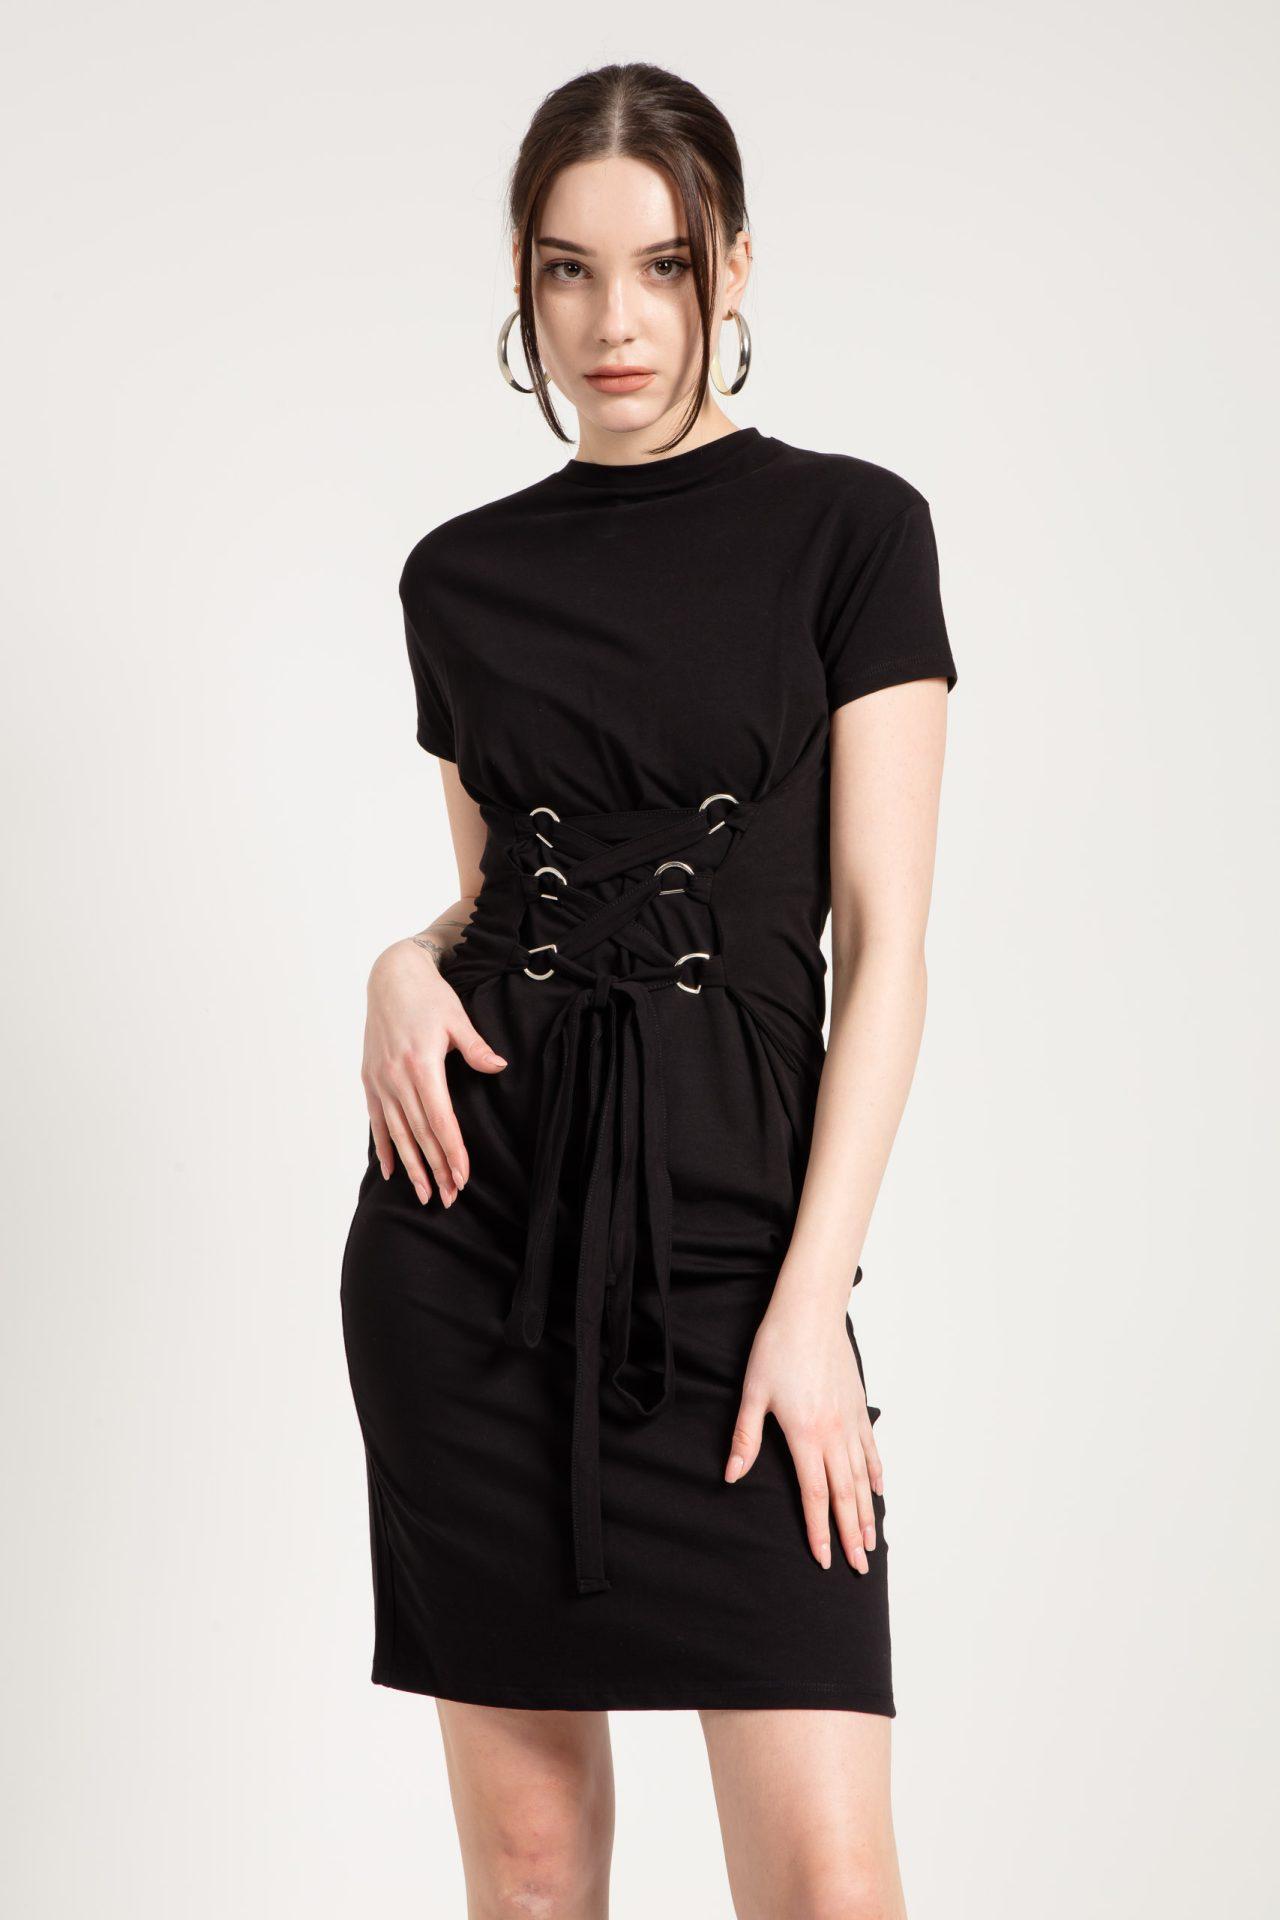 JAHR MARC LONDON миди фустан со детал-корсет - црна боја